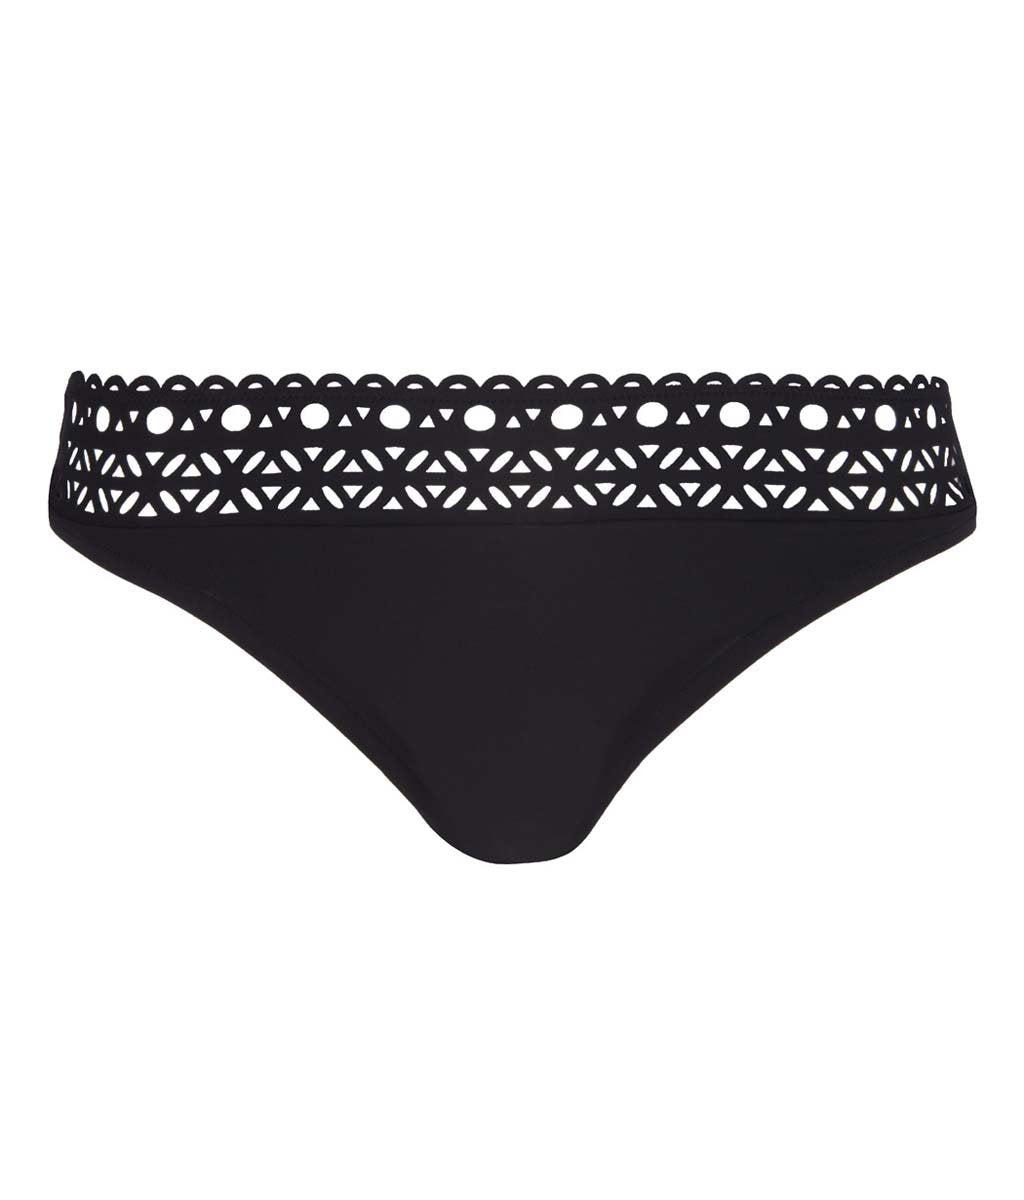 Lise Charmel 'Ajourage Couture' (Black) Low Waist Bikini Brief - Sandra Dee - Product Shot - Front